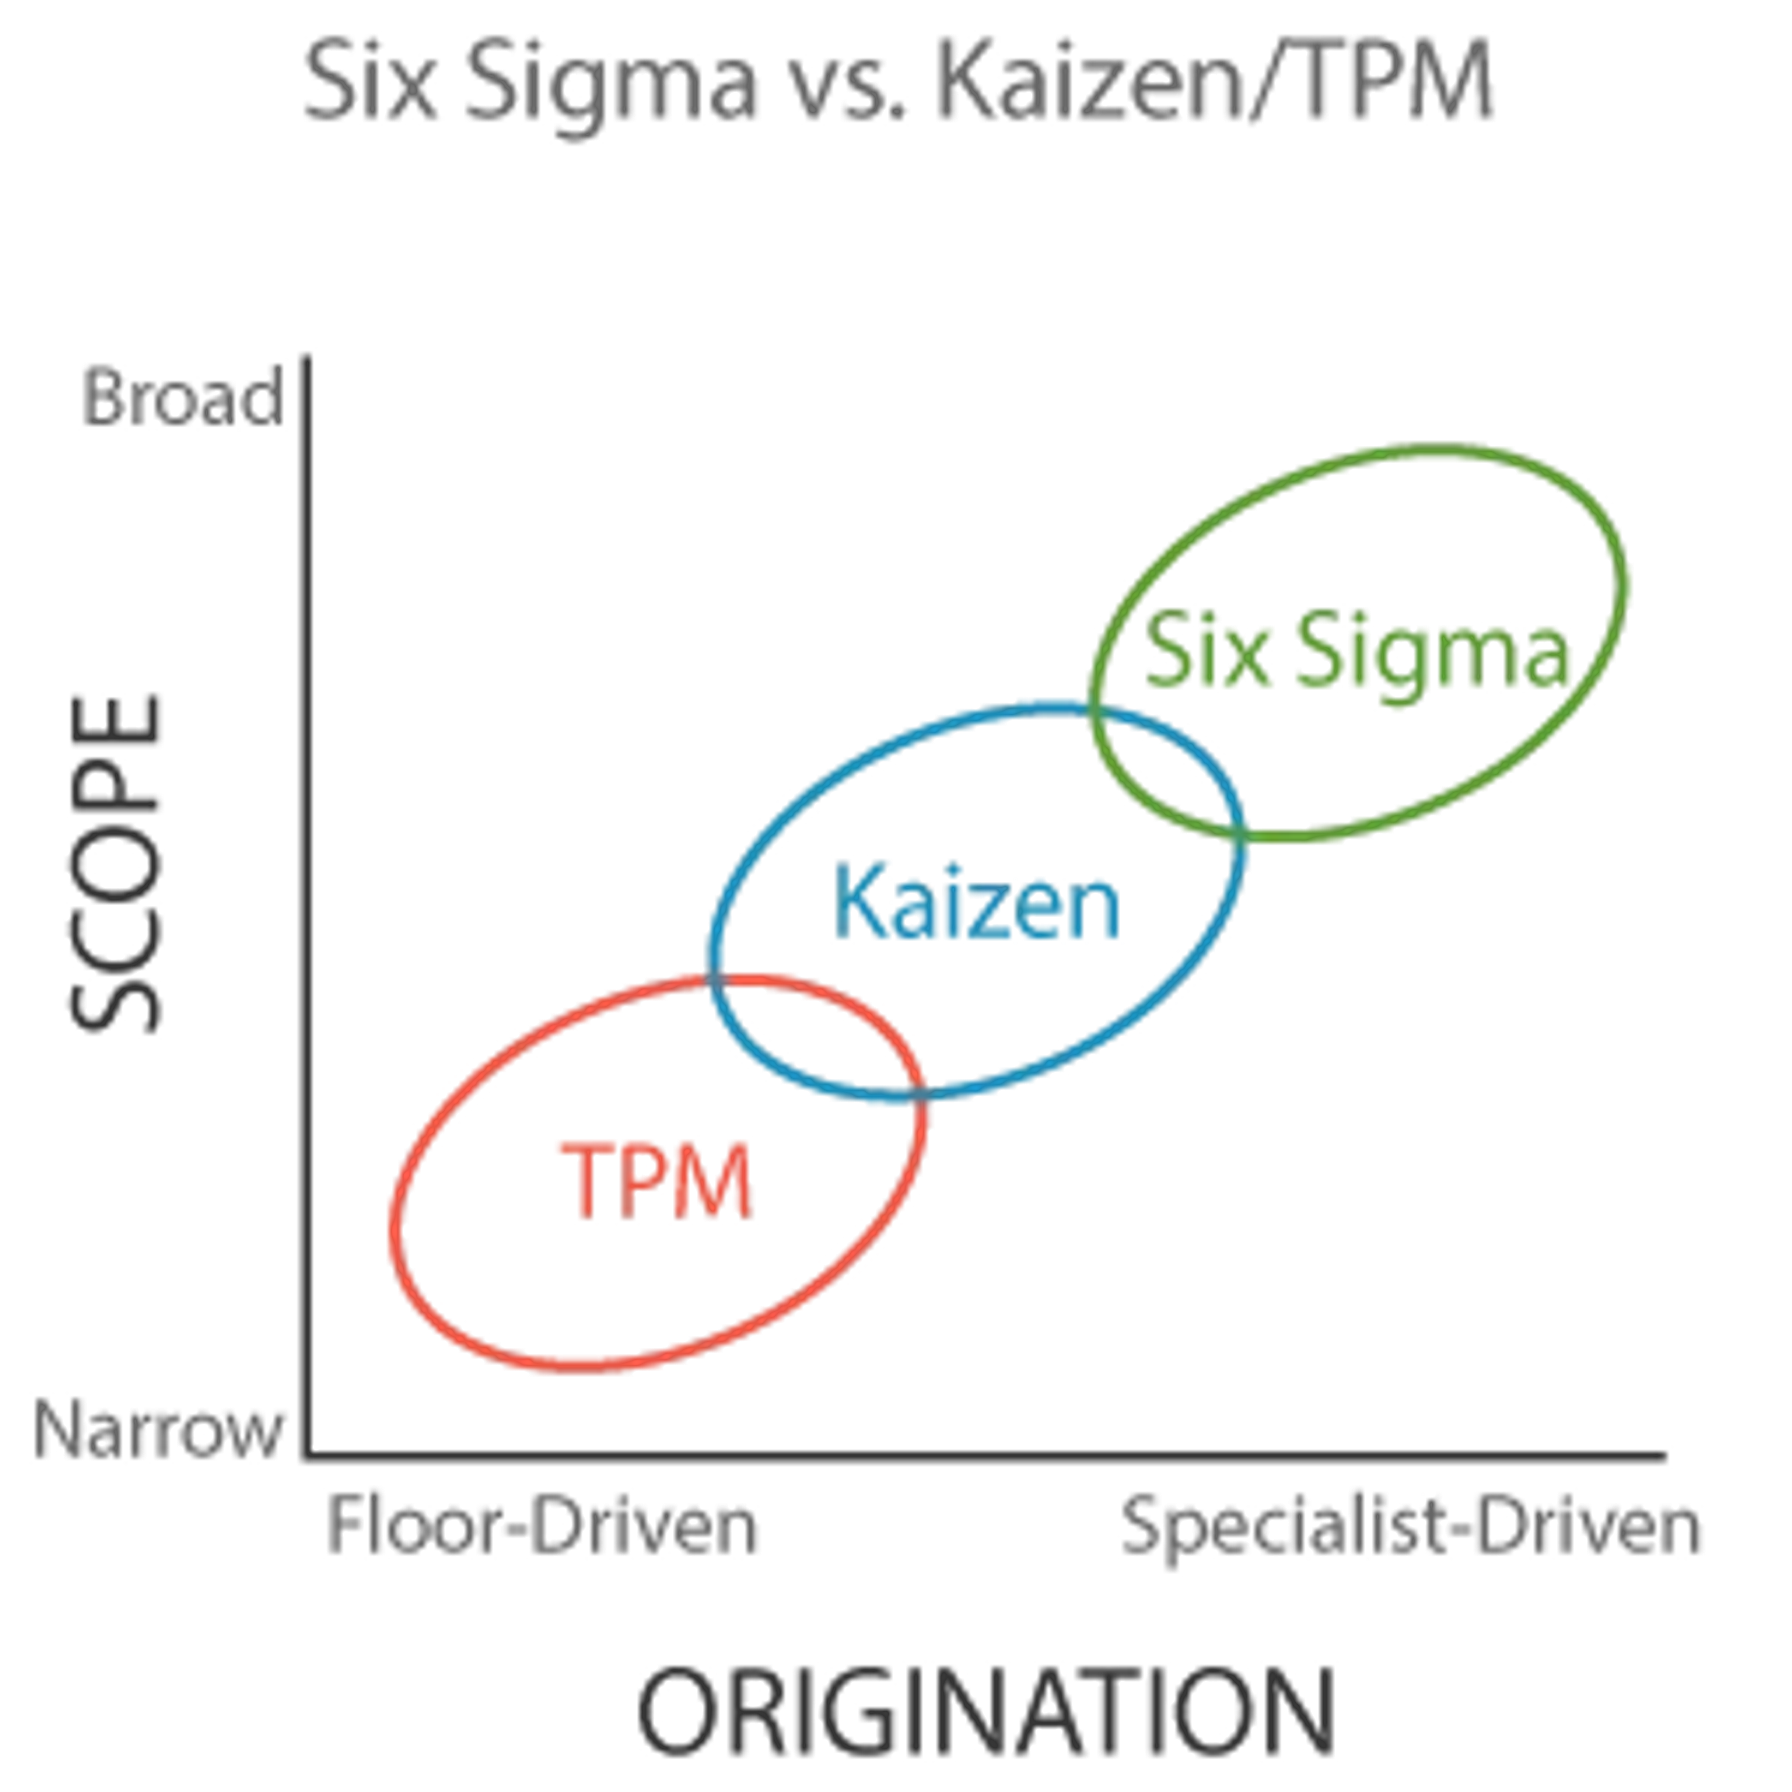 Six Sigma vs. Kaizen/TPM Chart